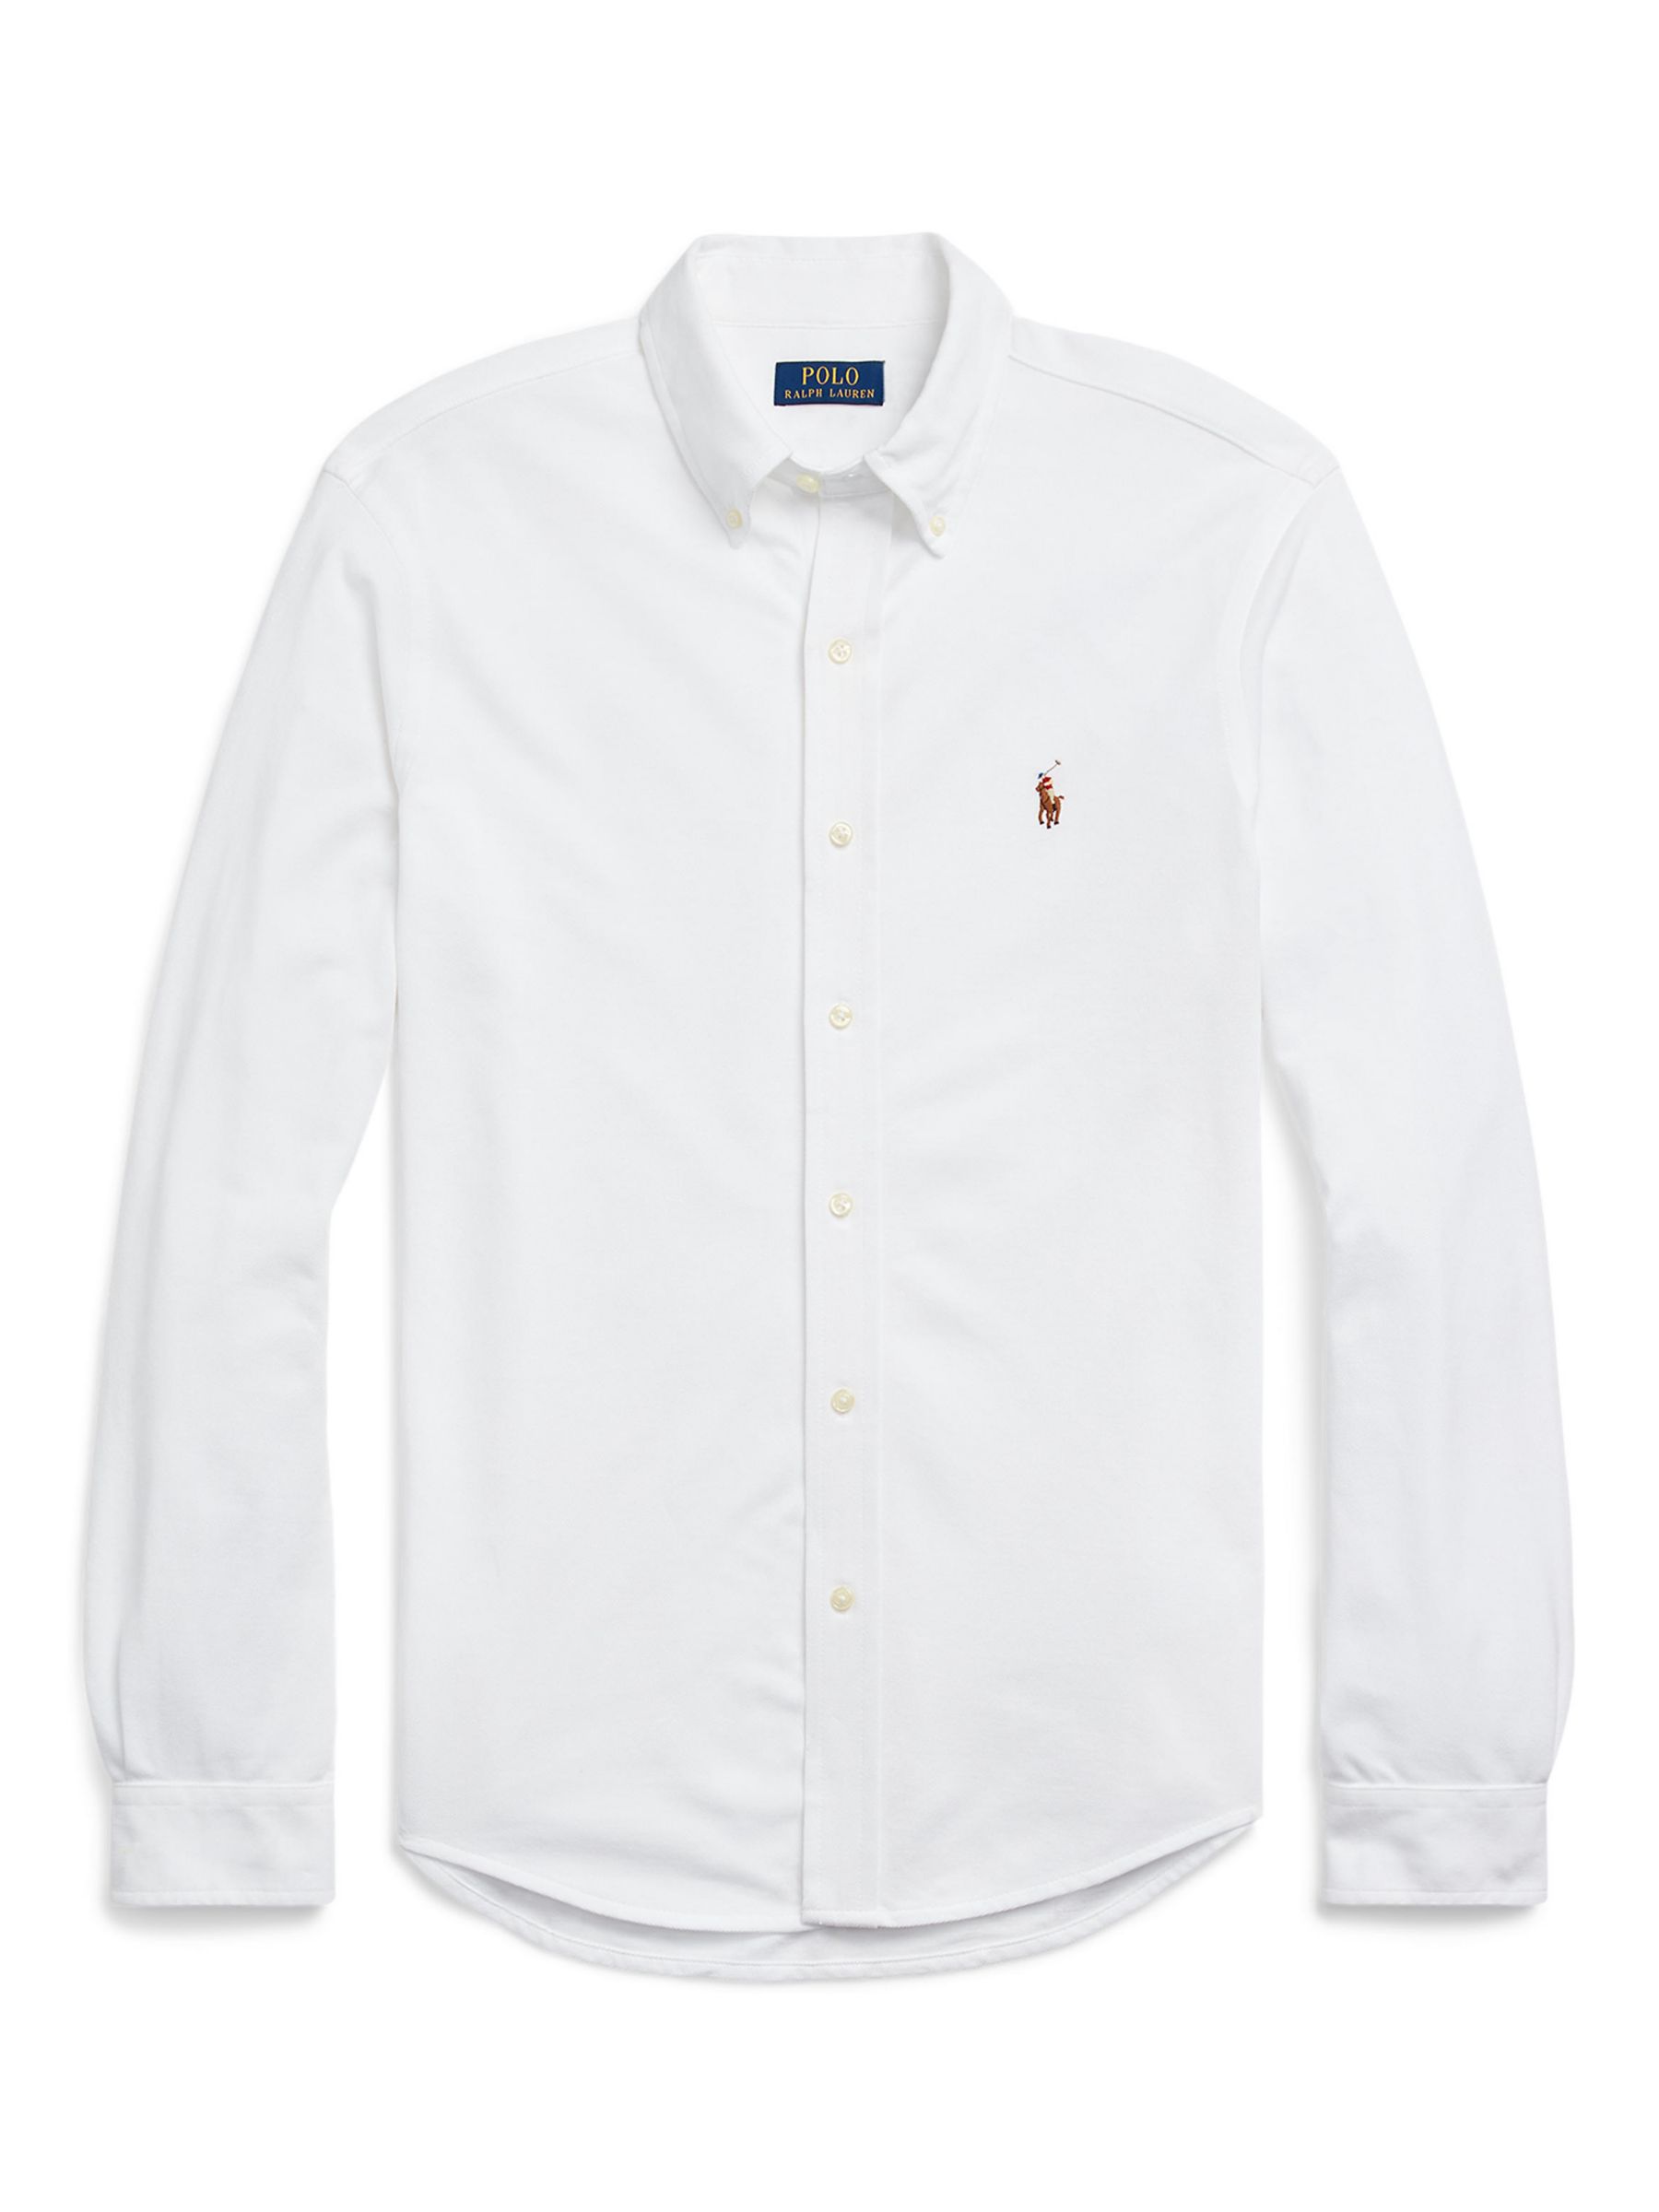 Polo Ralph Lauren Long Sleeve Regular Shirt, White at John Lewis & Partners